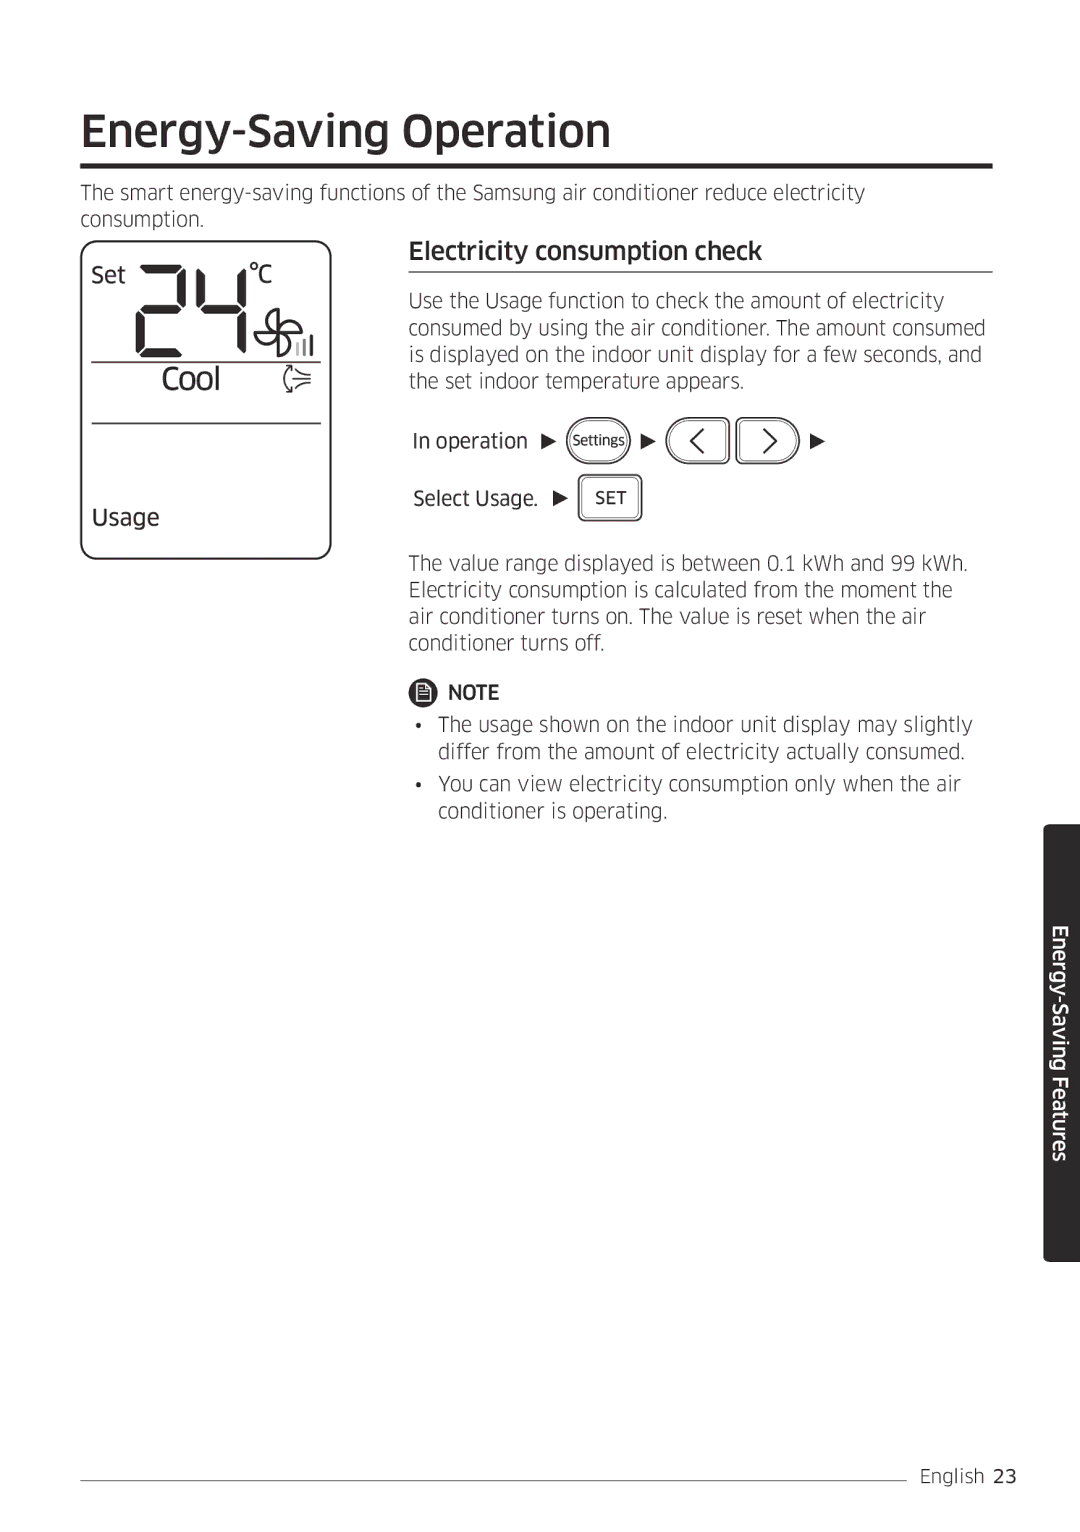 Samsung AR24MSPDBWKNEU, AR18MSPDBWKNEU manual Energy-Saving Operation, Electricity consumption check 